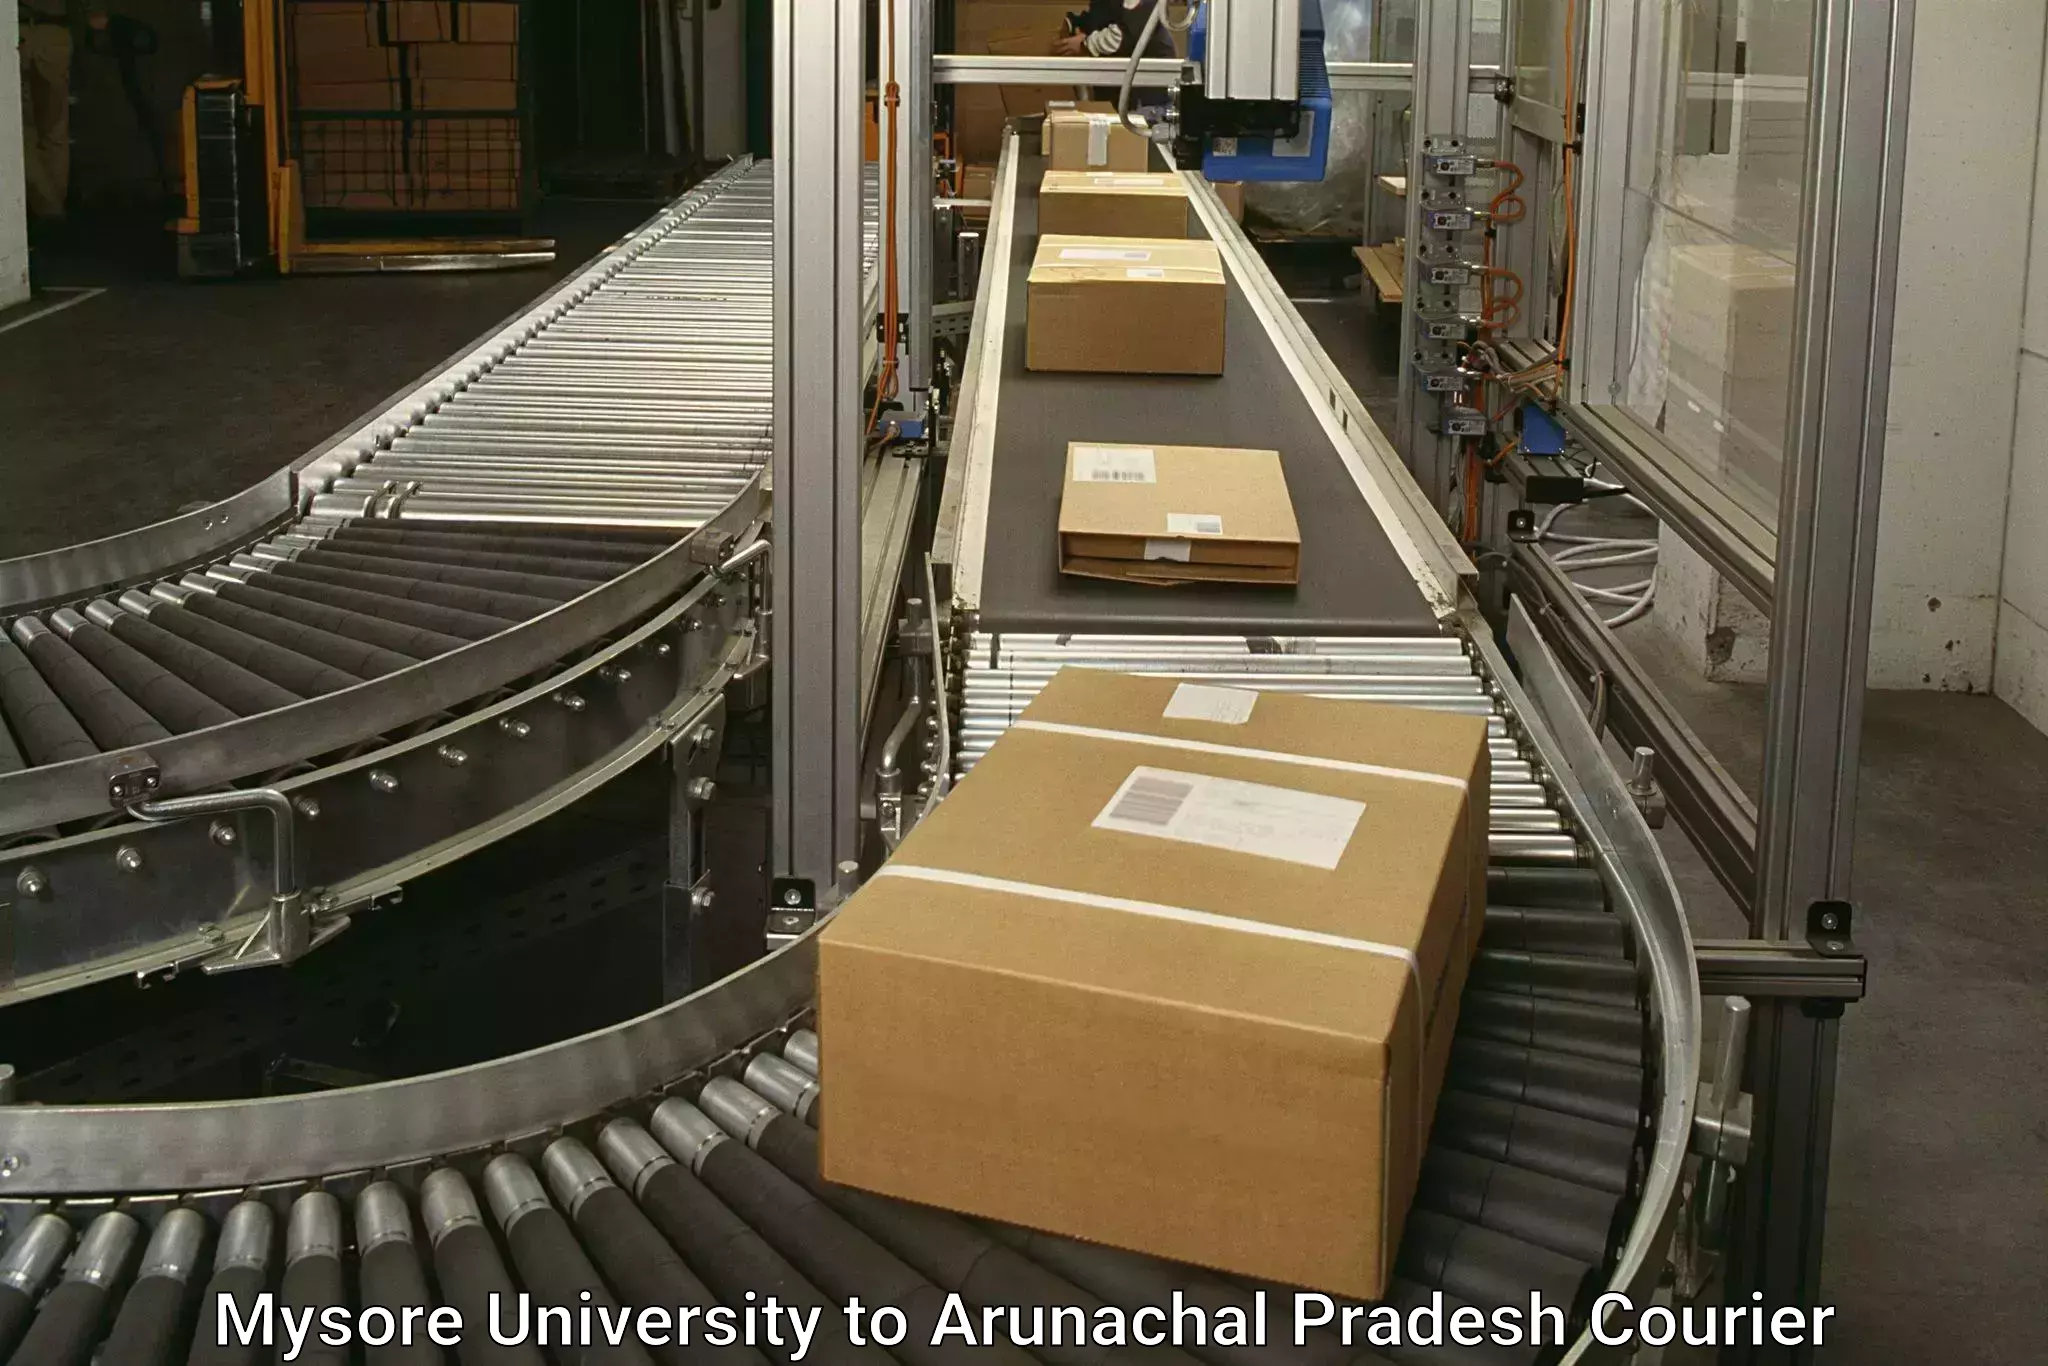 Courier service innovation Mysore University to Arunachal Pradesh